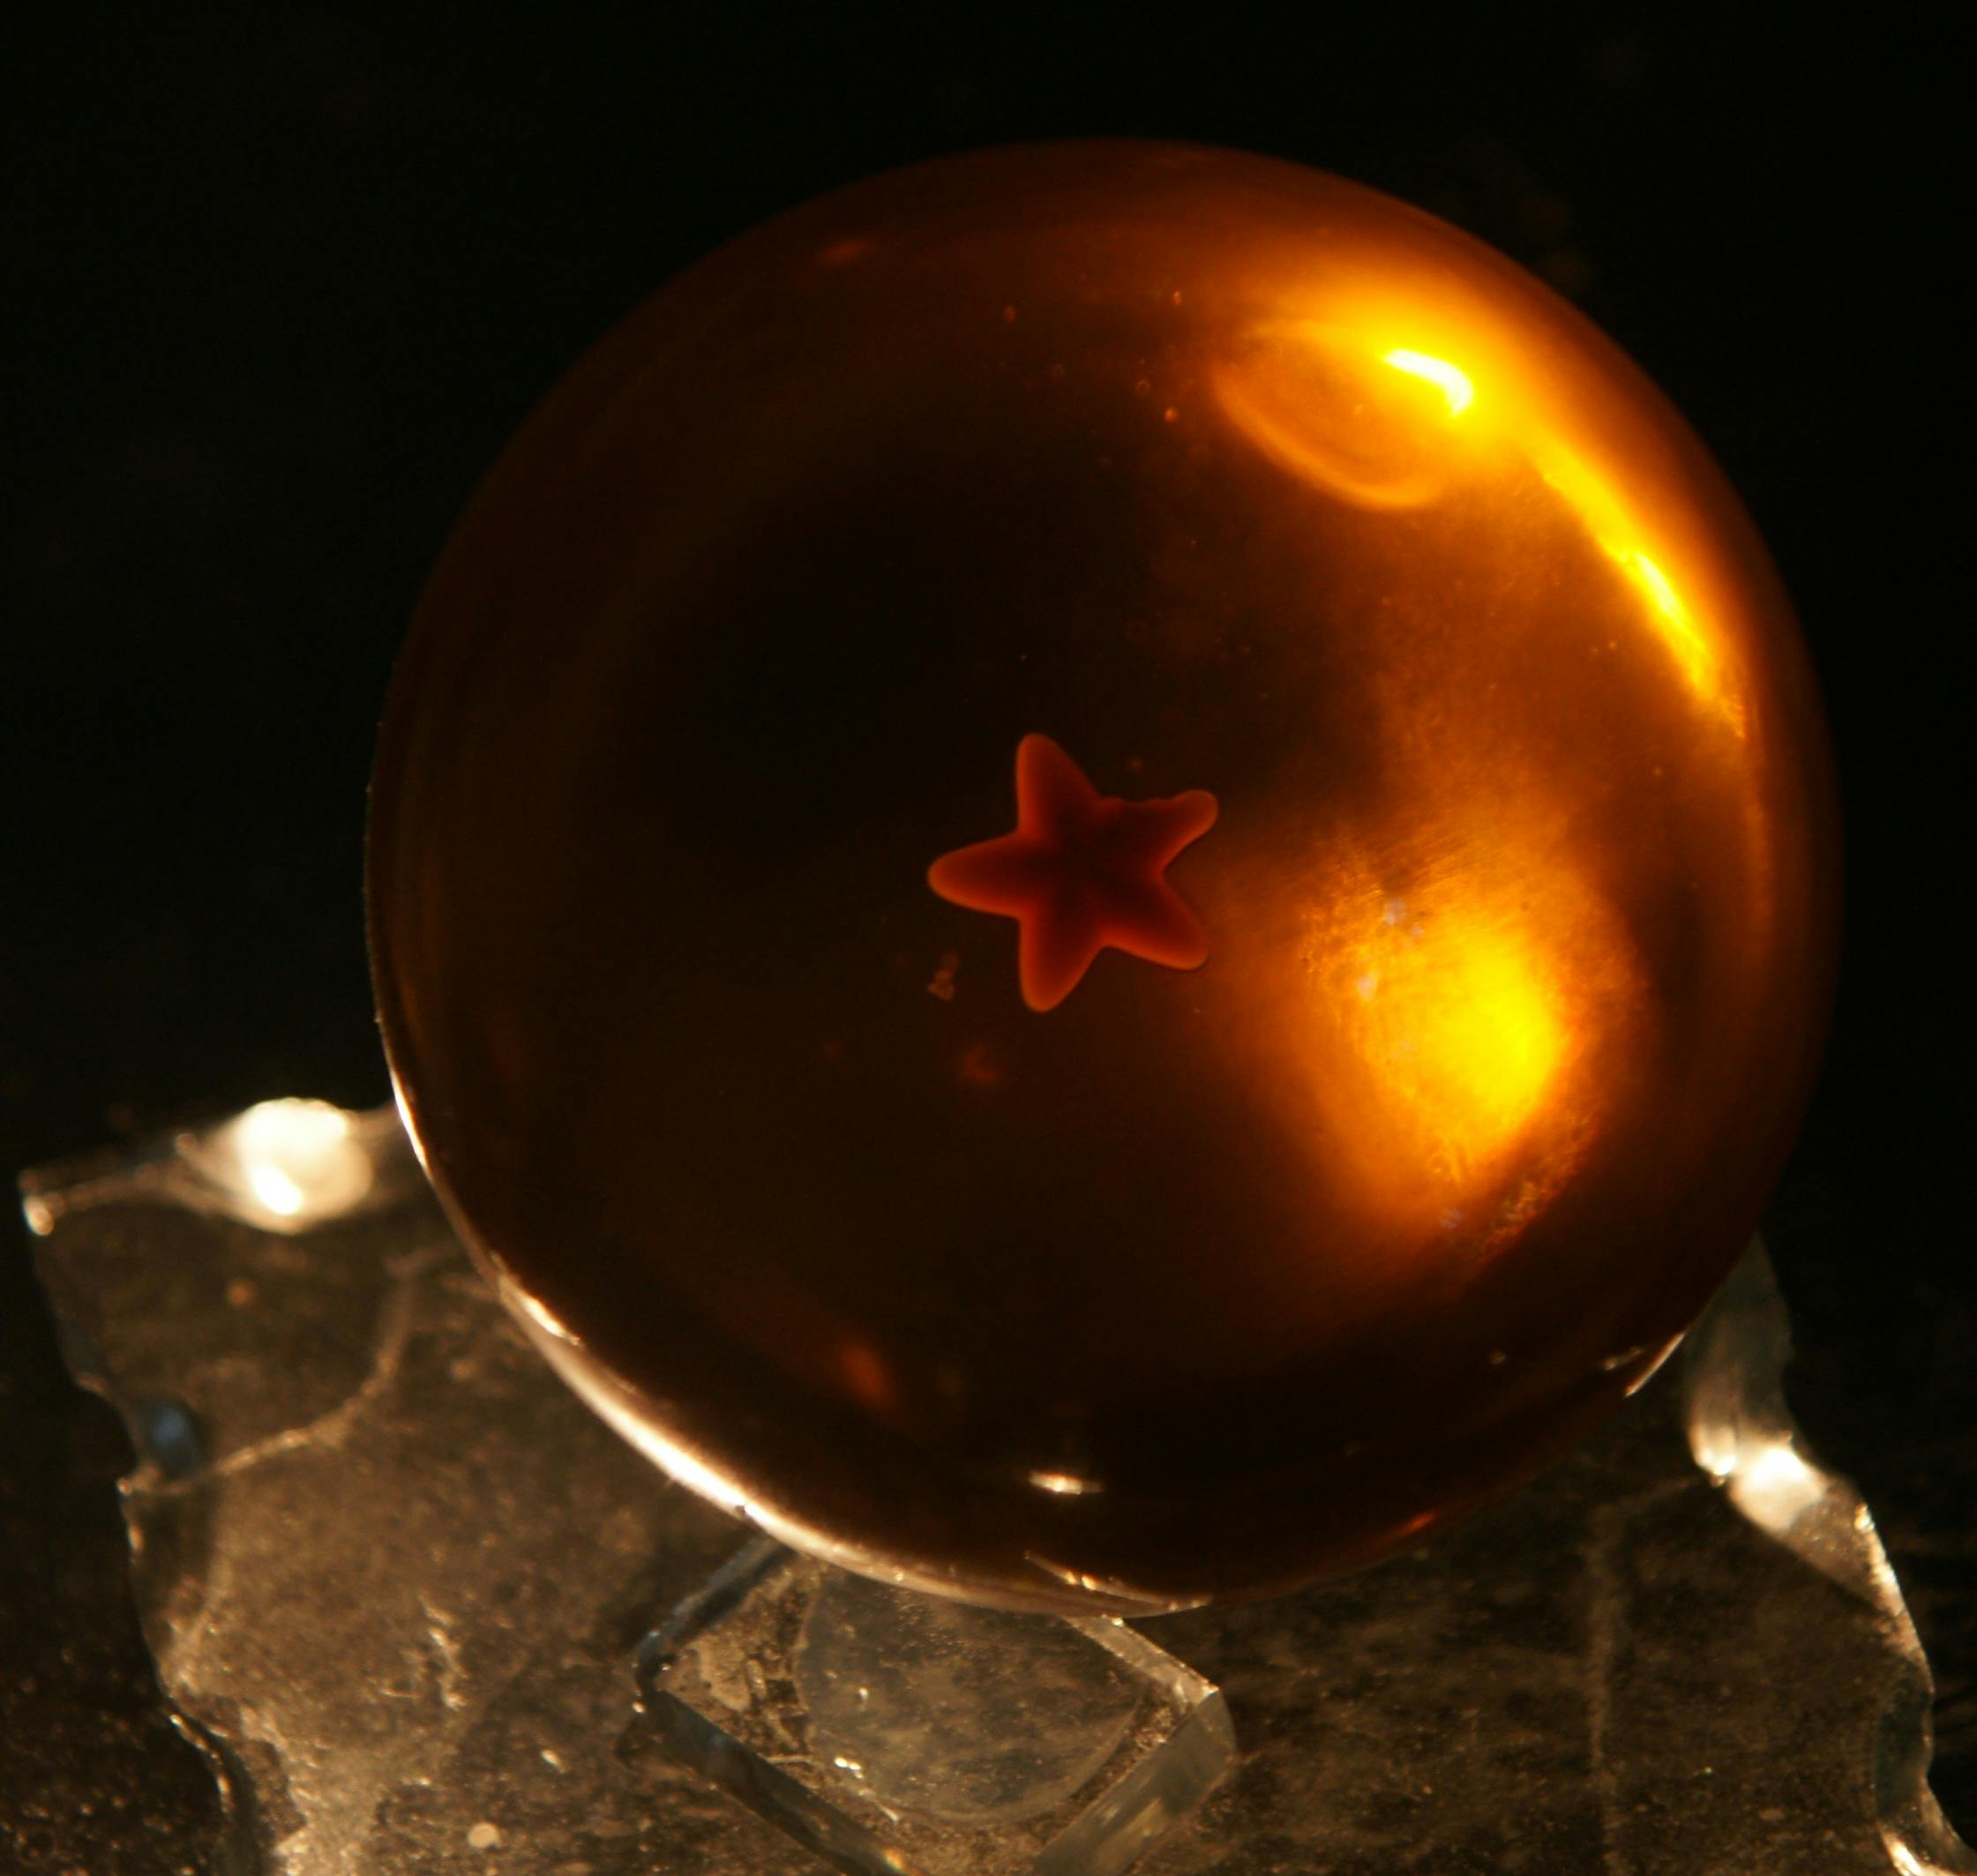 Free stock photo of Dragon ball